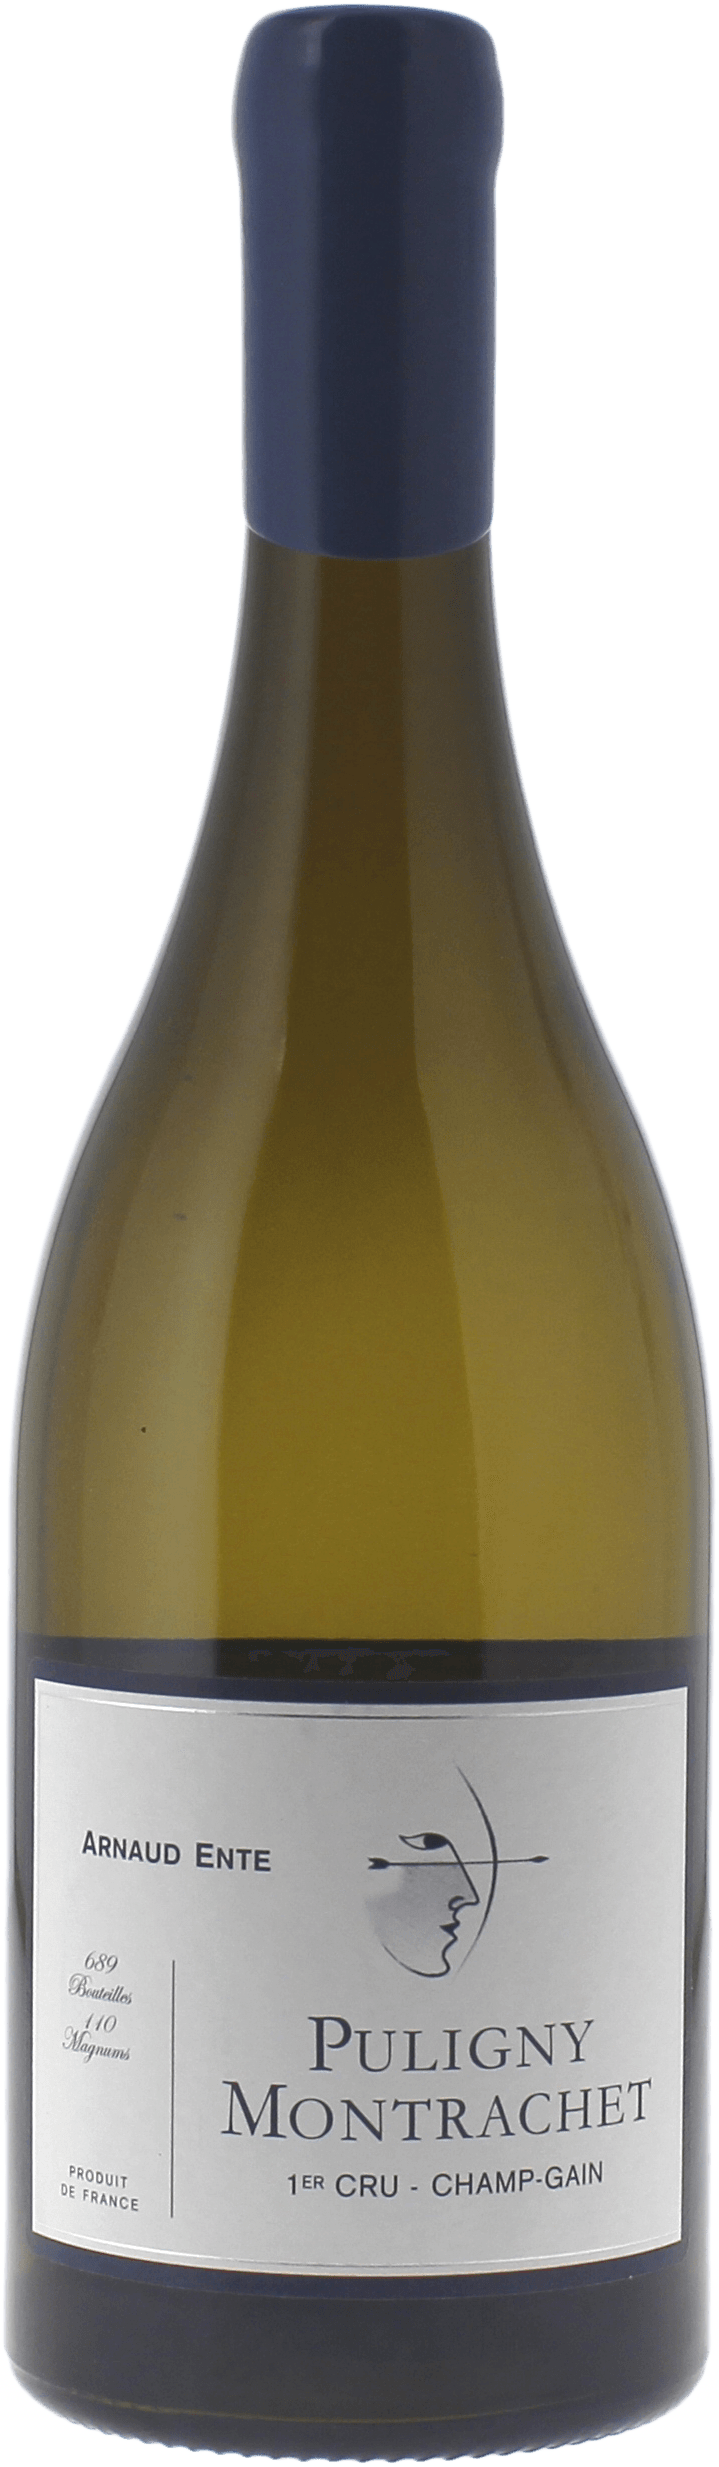 Puligny montrachet 1er cru le champ gain 2015 Domaine ENTE Arnaud, Bourgogne blanc